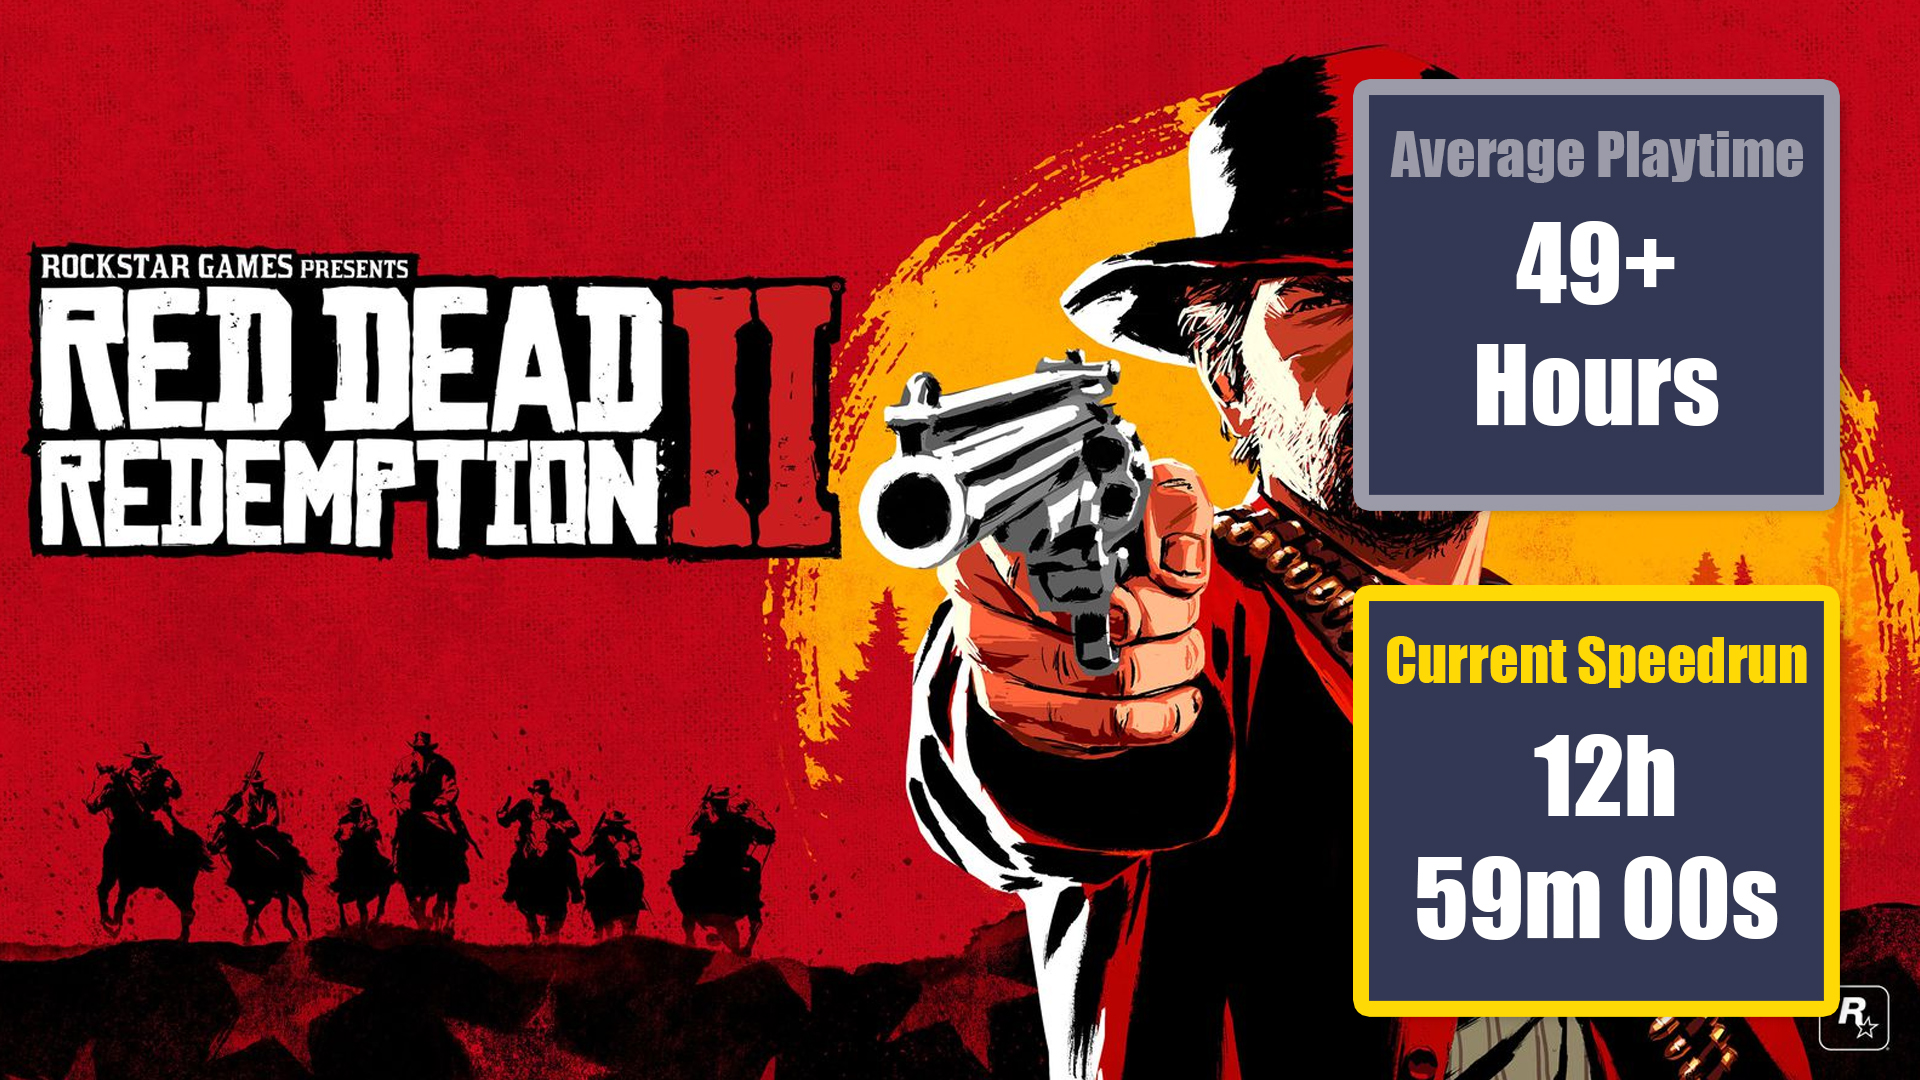 fast video game speed runs - Red Dead Redemption 2